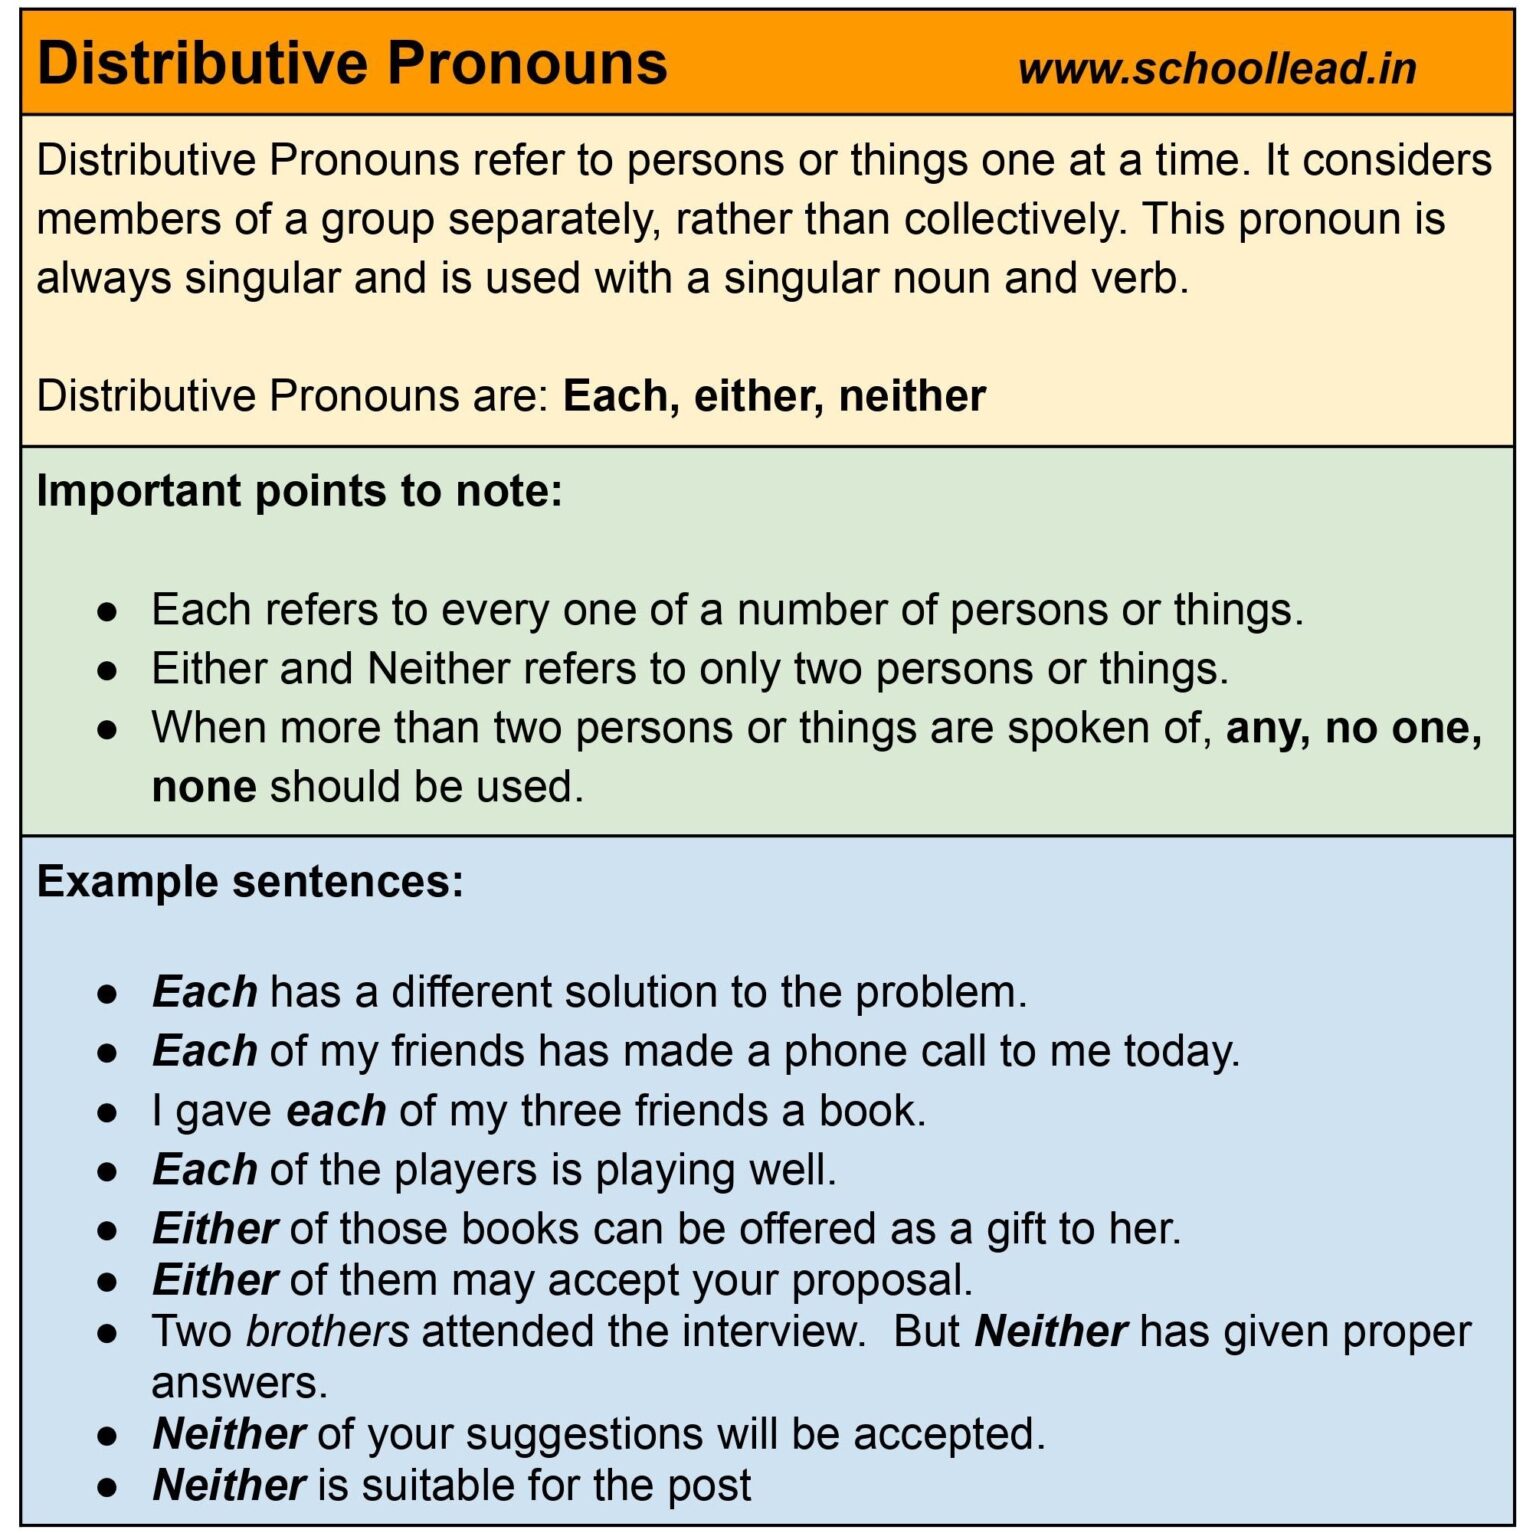 distributive-pronouns-school-lead